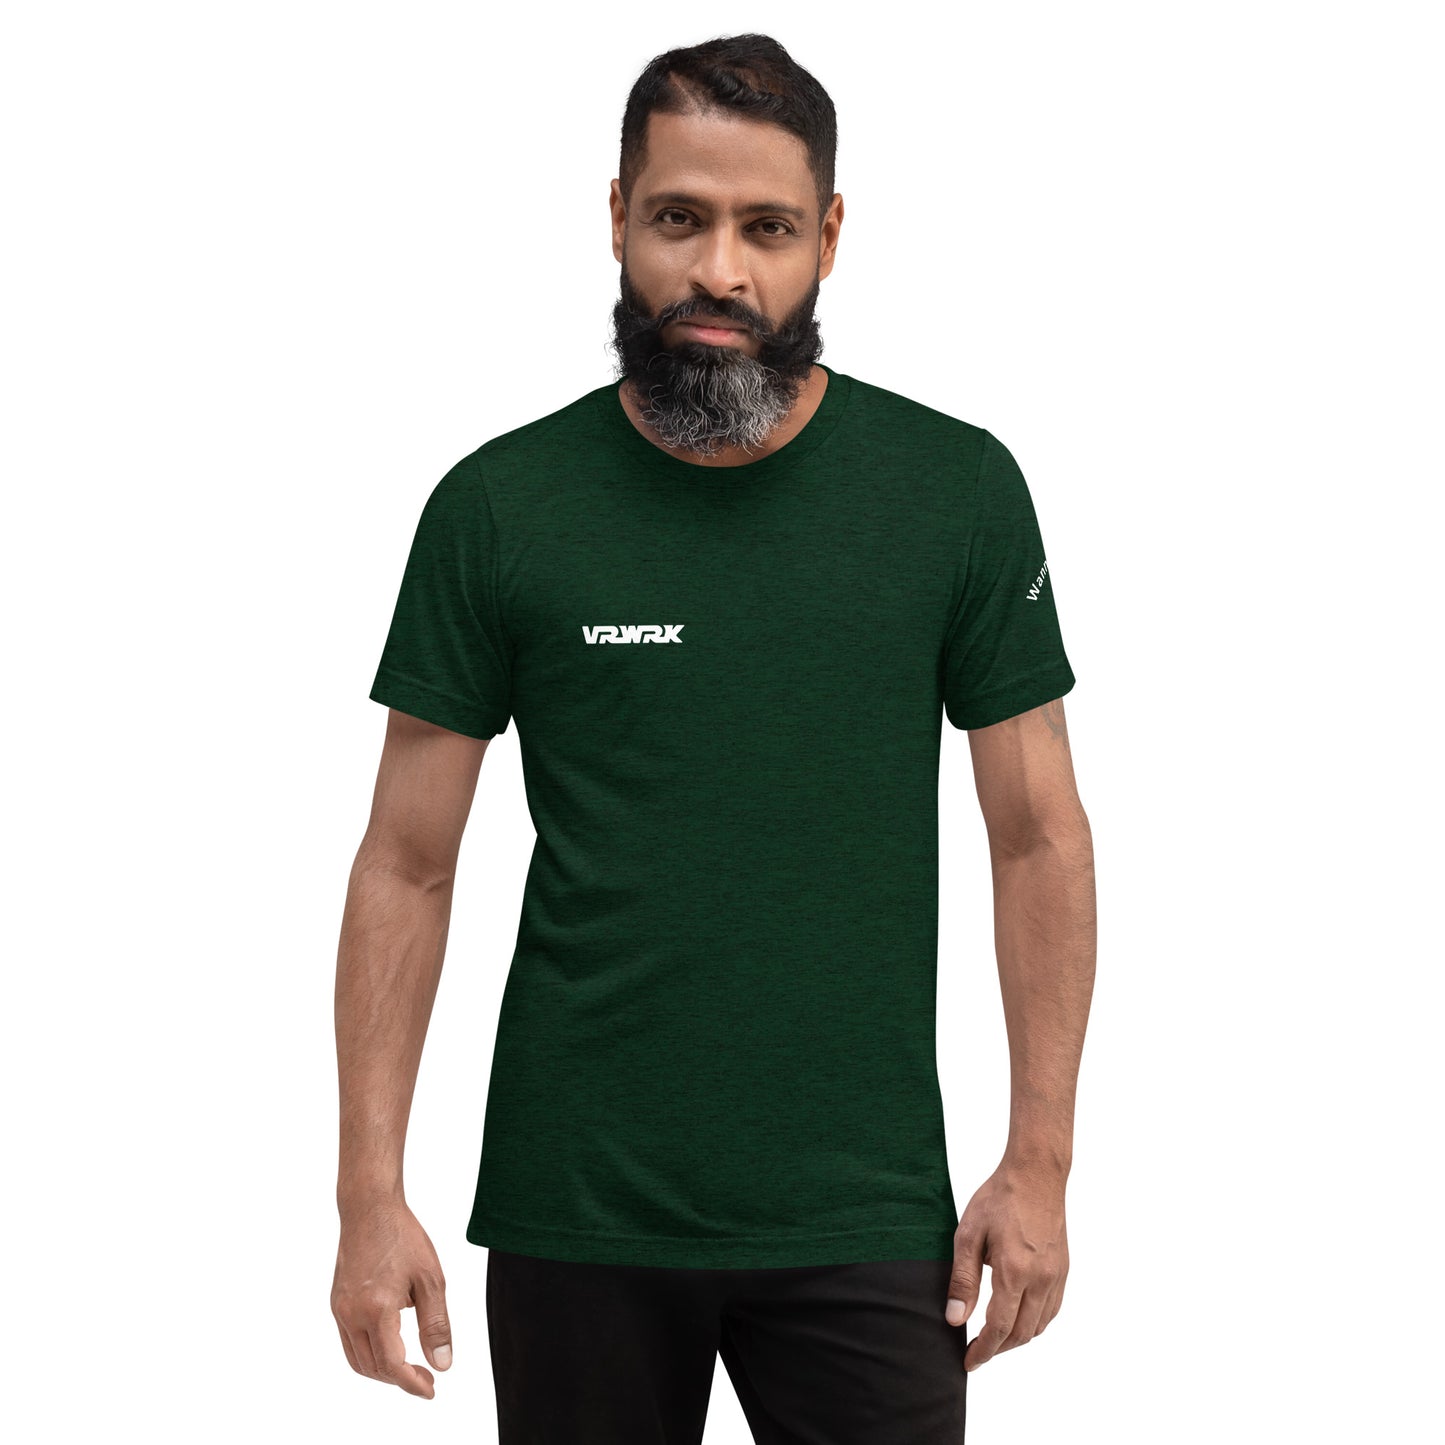 VRWRK Wanna Collab? Short sleeve t-shirt